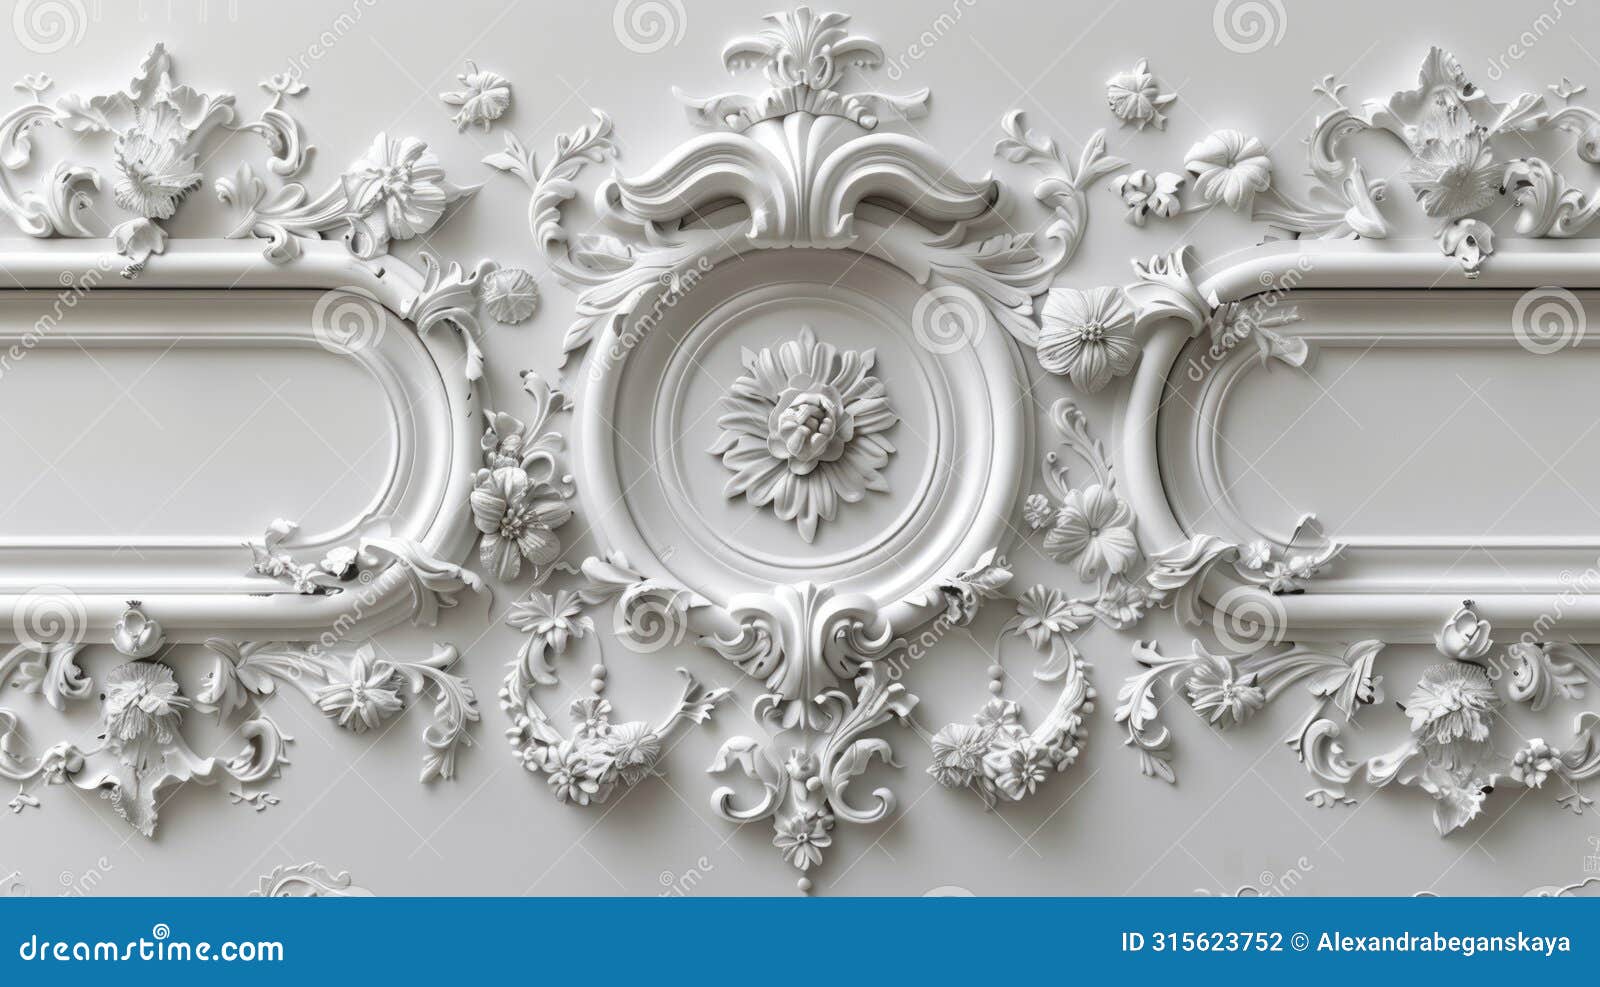 white ornamental plasterwork detail with floral pattern